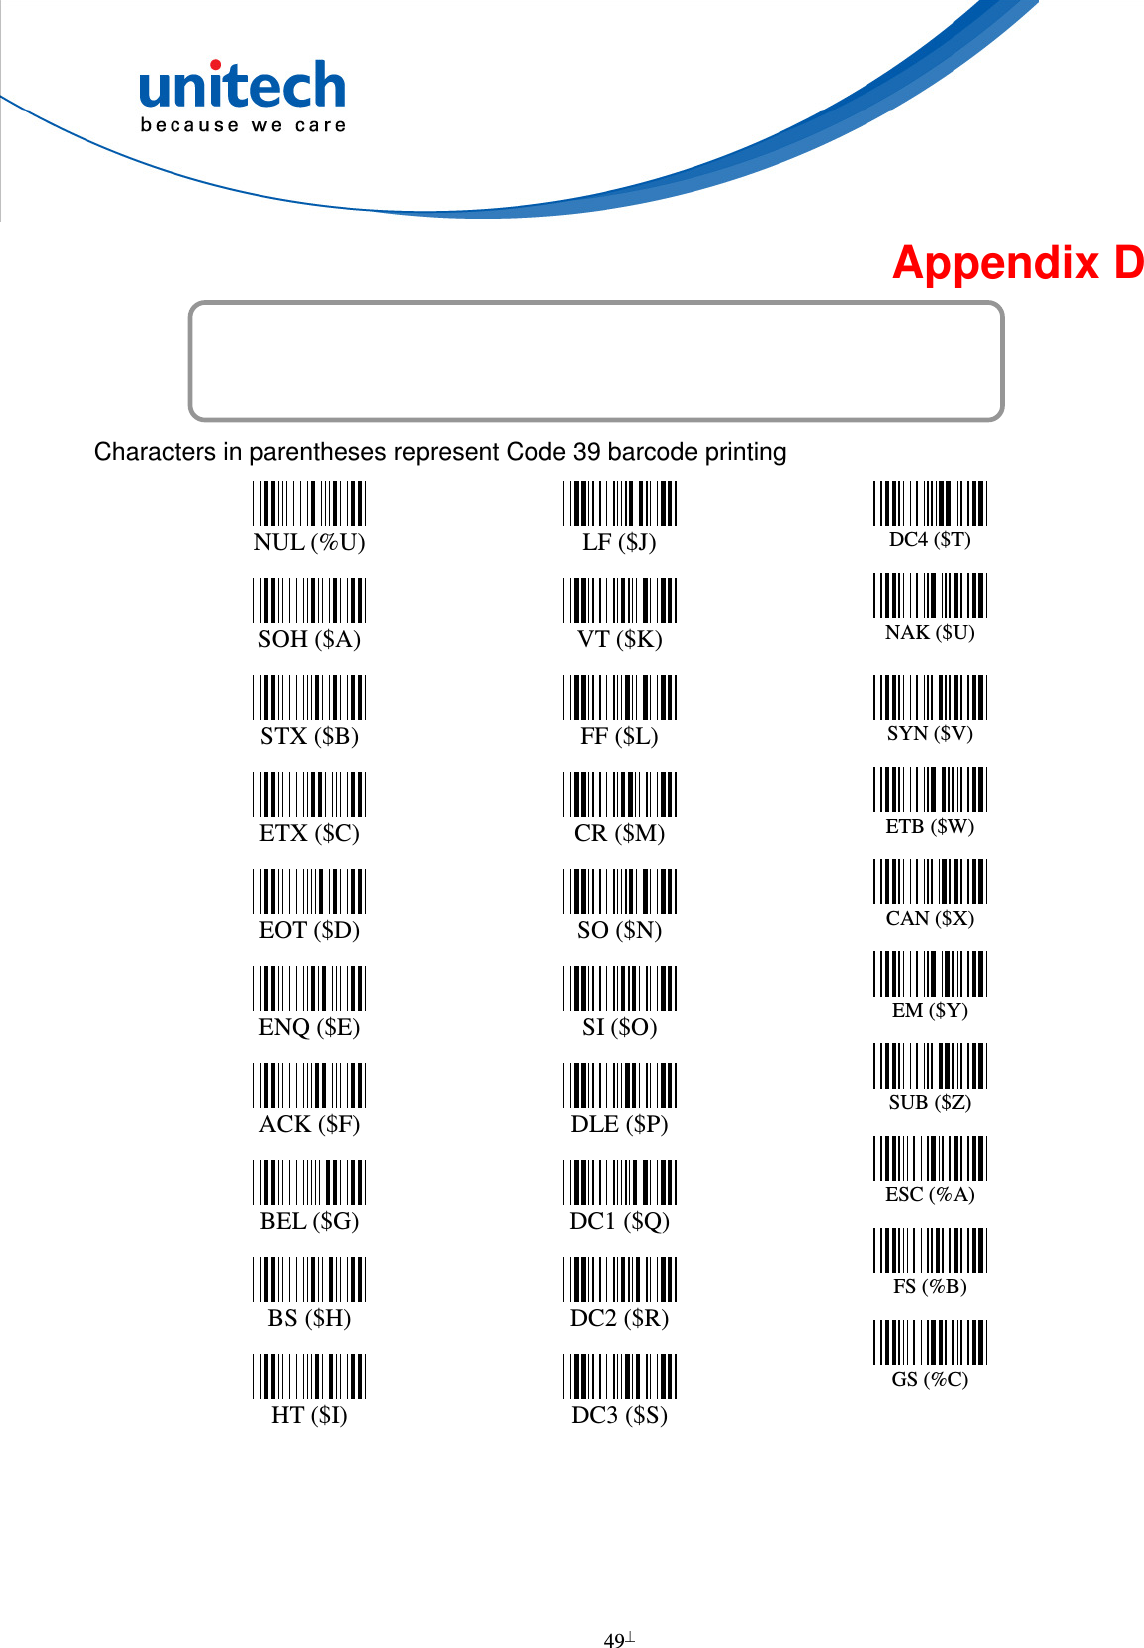  49  Appendix D Full ASCII Chart  Characters in parentheses represent Code 39 barcode printing  NUL (%U)   SOH ($A)   STX ($B)   ETX ($C)   EOT ($D)   ENQ ($E)   ACK ($F)   BEL ($G)   BS ($H)   HT ($I)  LF ($J)   VT ($K)   FF ($L)   CR ($M)   SO ($N)   SI ($O)   DLE ($P)   DC1 ($Q)   DC2 ($R)   DC3 ($S)  DC4 ($T)   NAK ($U)   SYN ($V)   ETB ($W)   CAN ($X)   EM ($Y)   SUB ($Z)   ESC (%A)   FS (%B)   GS (%C)  